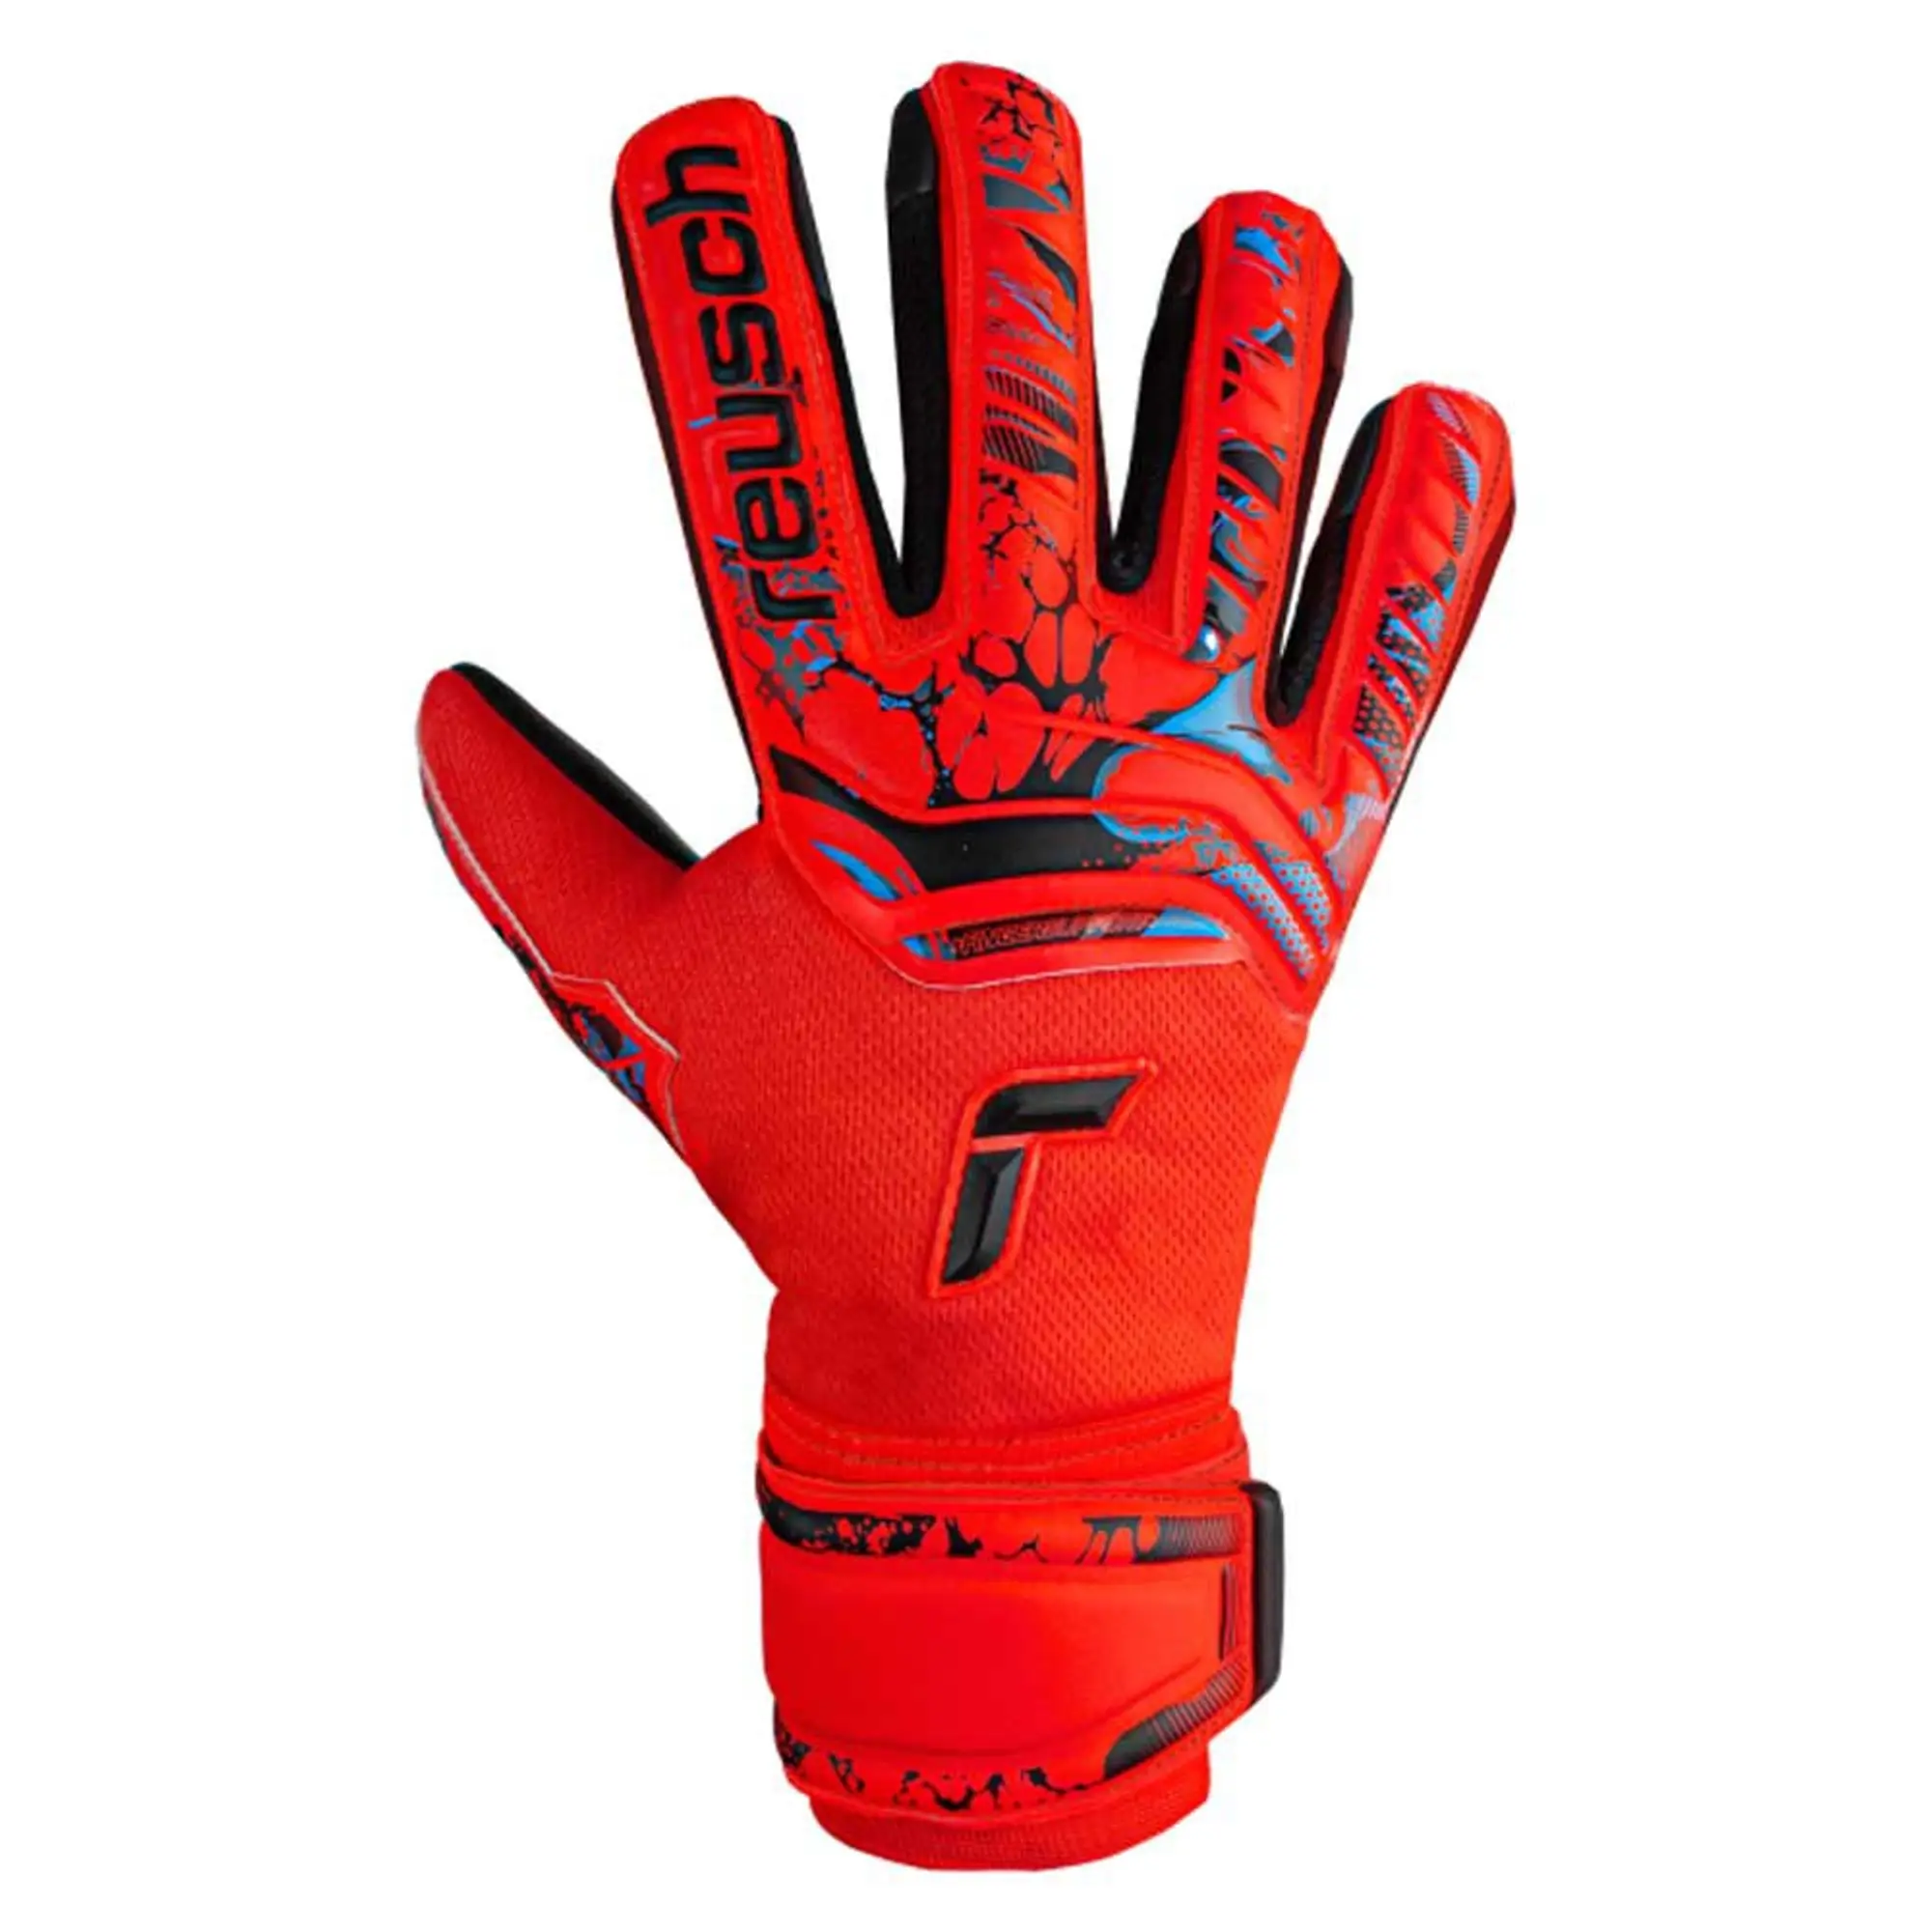 Reusch Attrakt Grip Evolution Finger Support Junior Goalkeeper Gloves  7 -